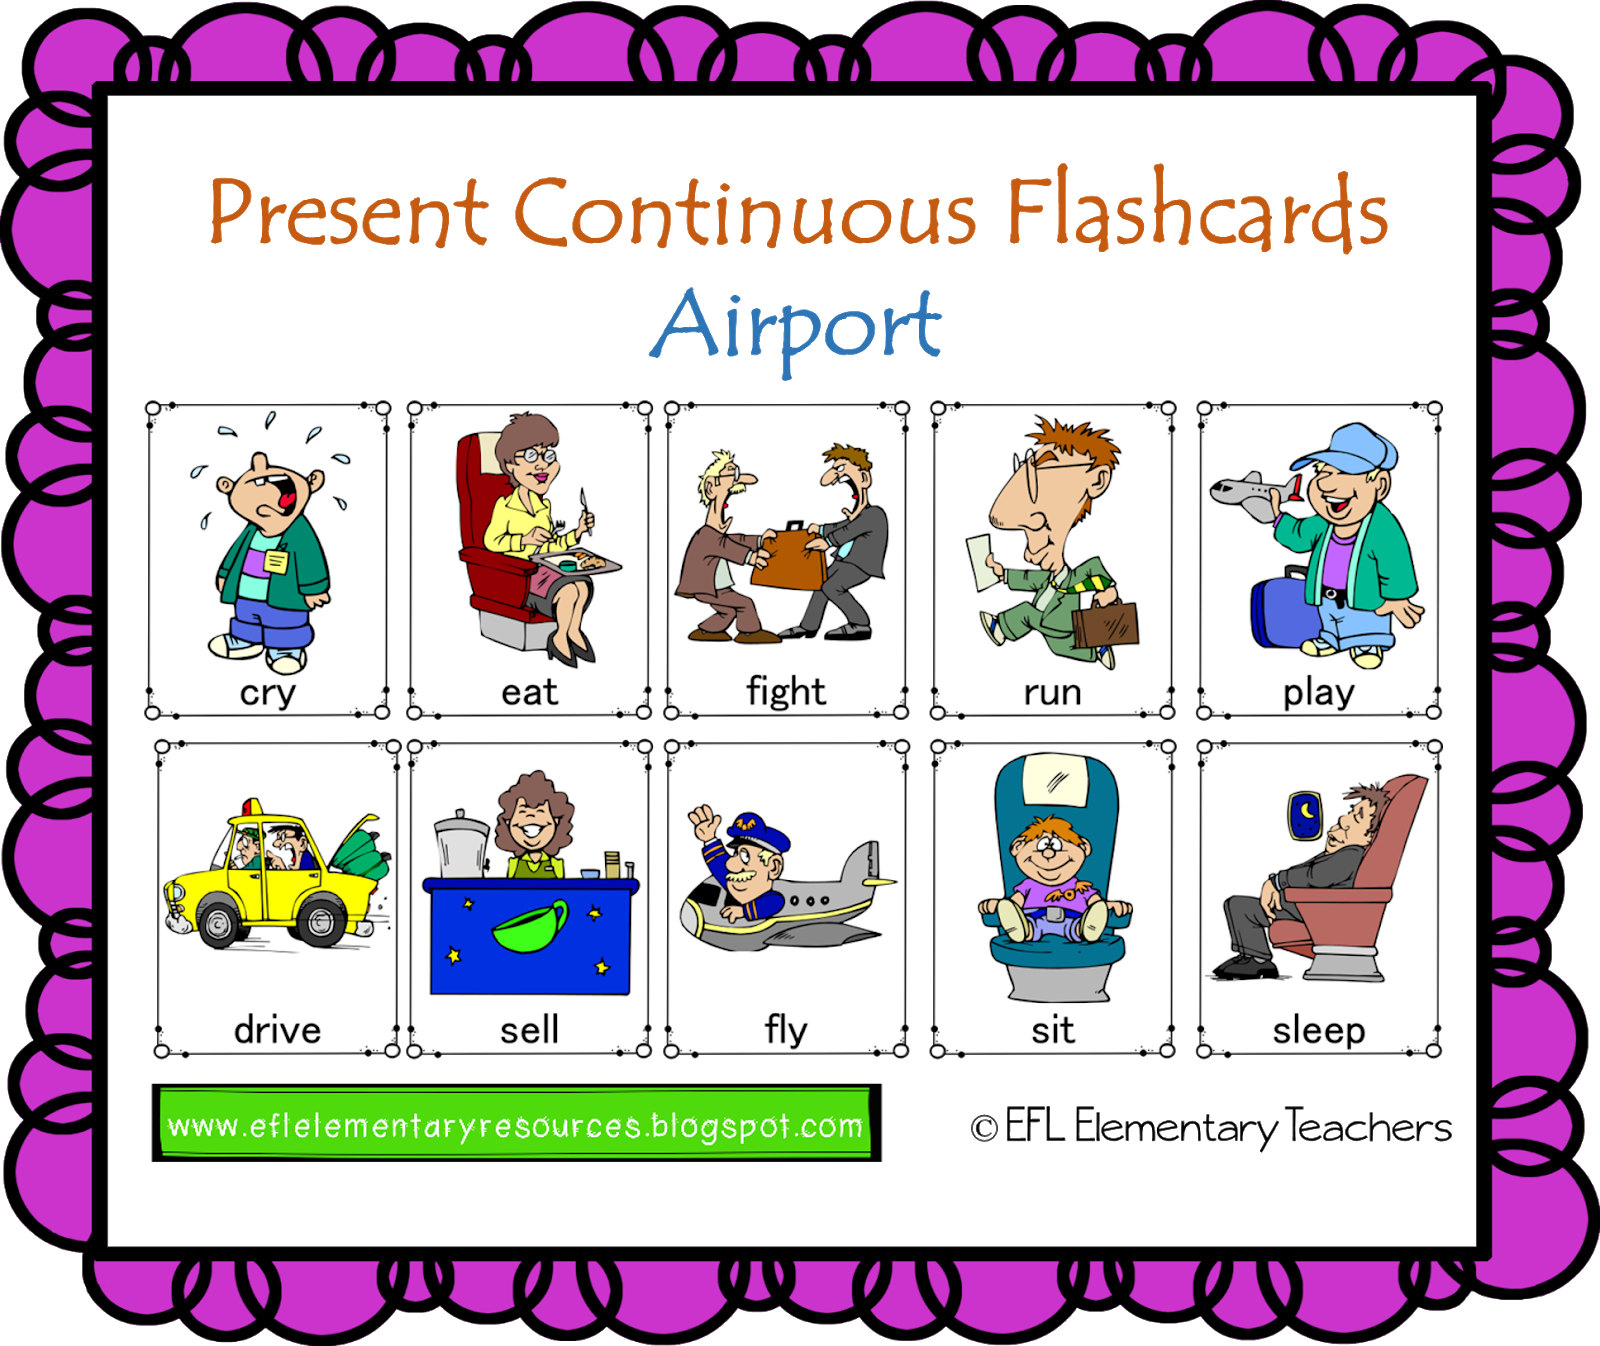 Present Continuous. Present Continuous упражнения с картинками. Present Continuous для детей. Present Continuous карточки.